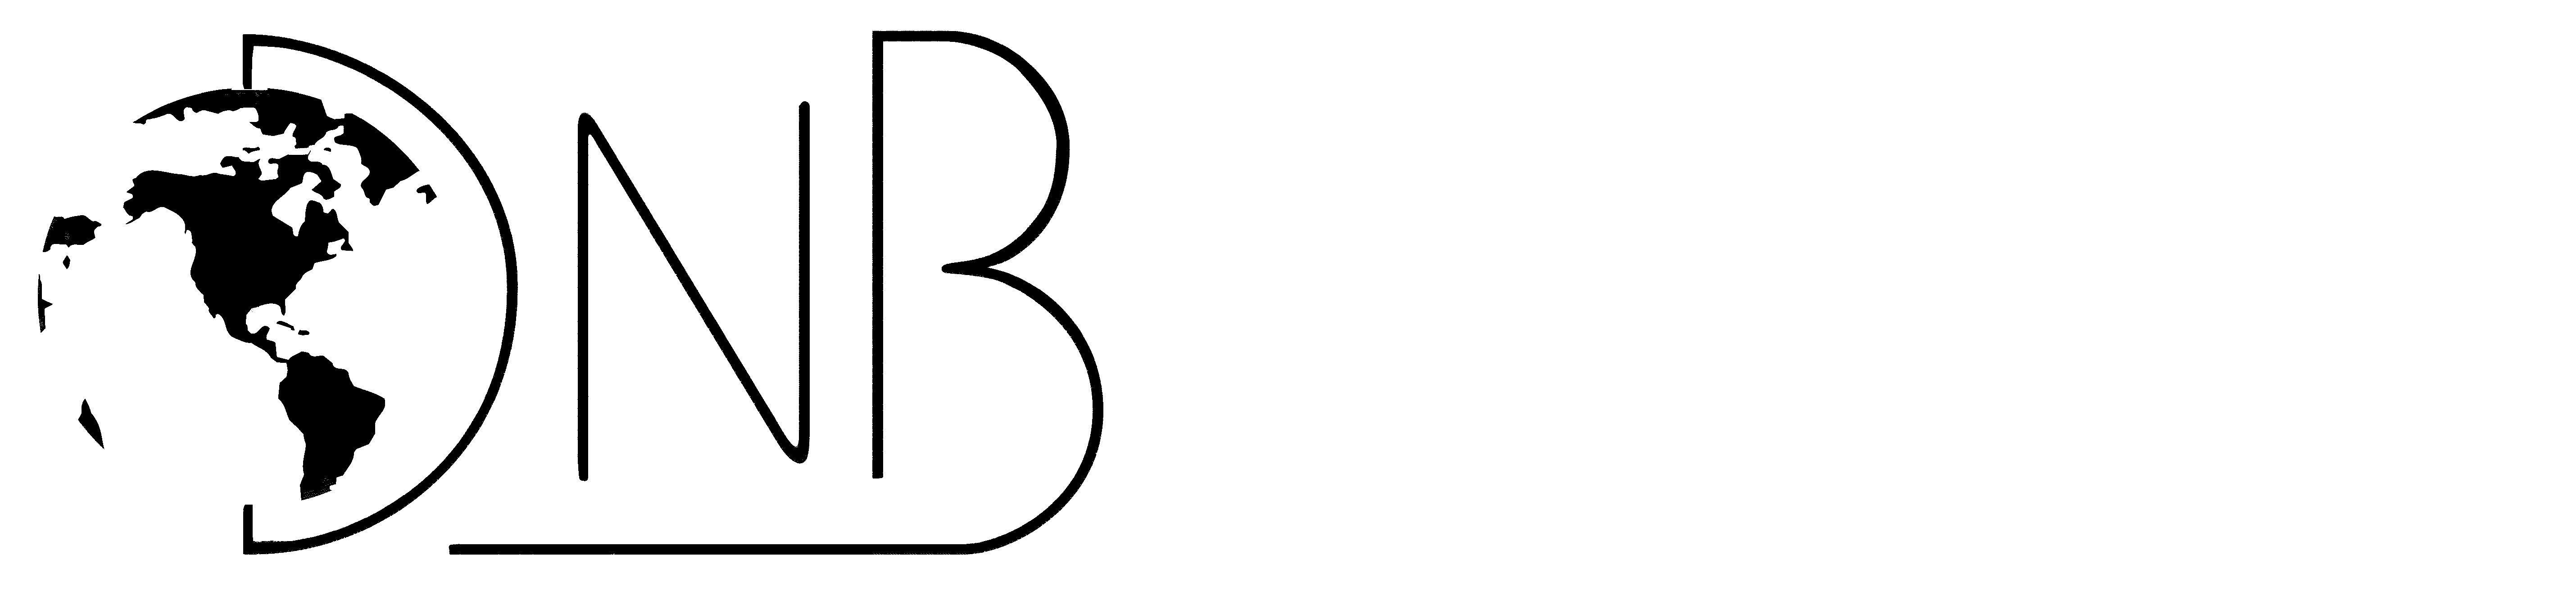 DNB Engineering, Inc